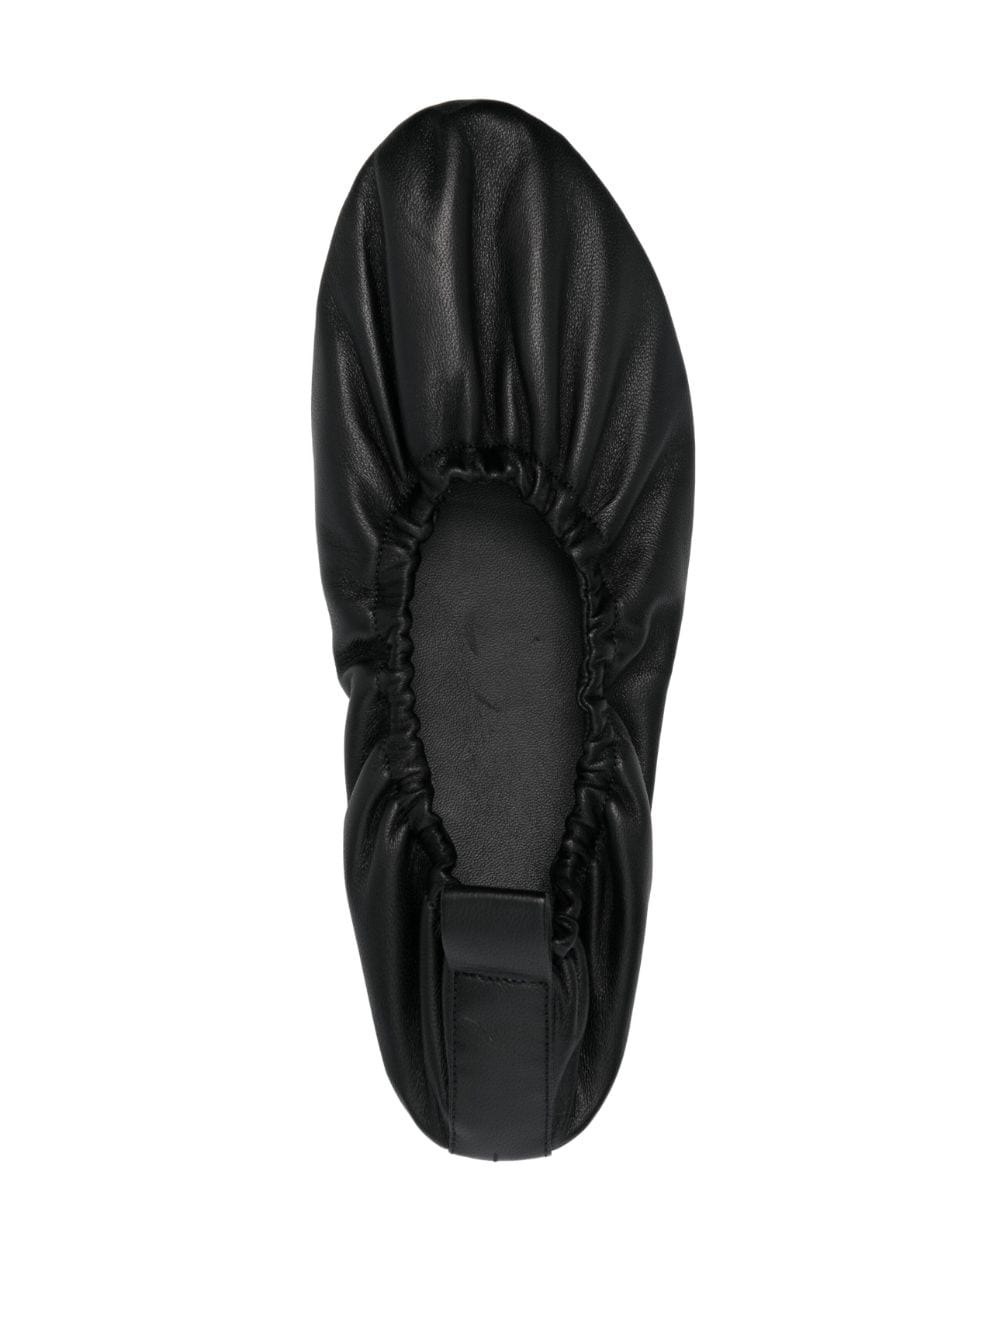 slip-on leather ballerina shoes - 4